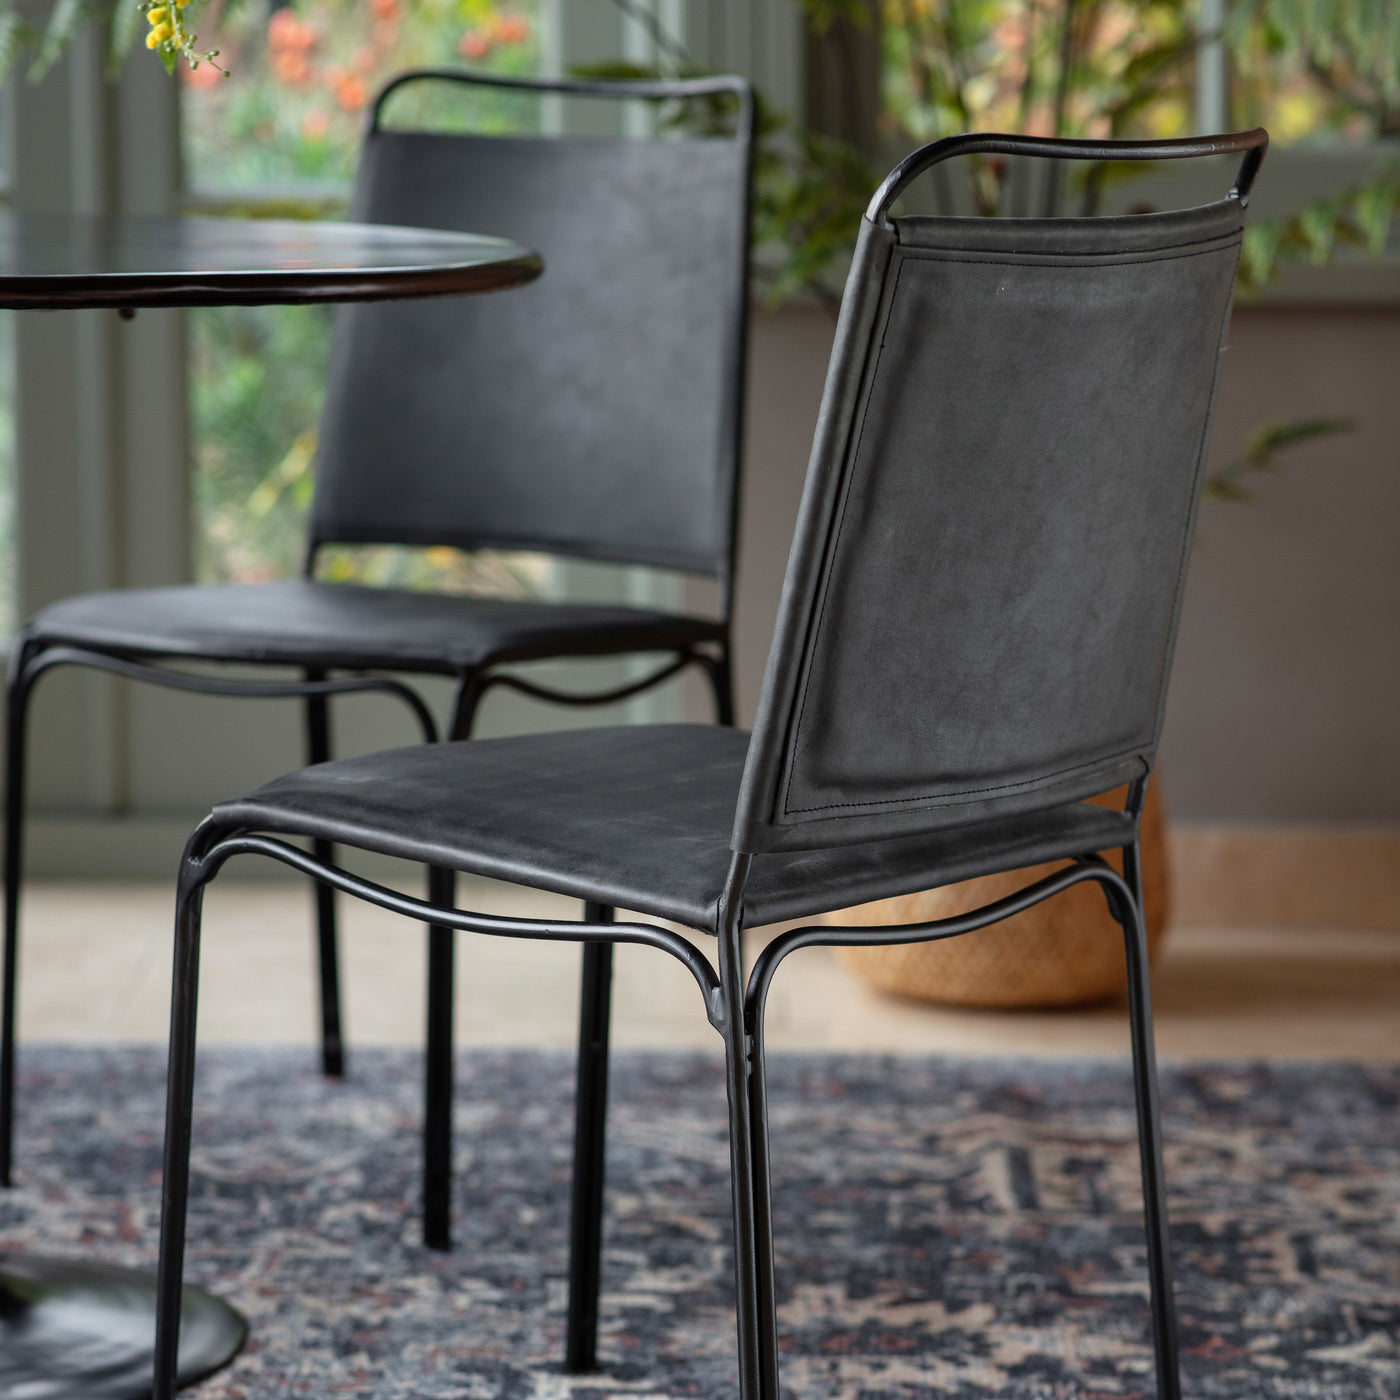 Enniskillen Dining Chair Black (2pk)